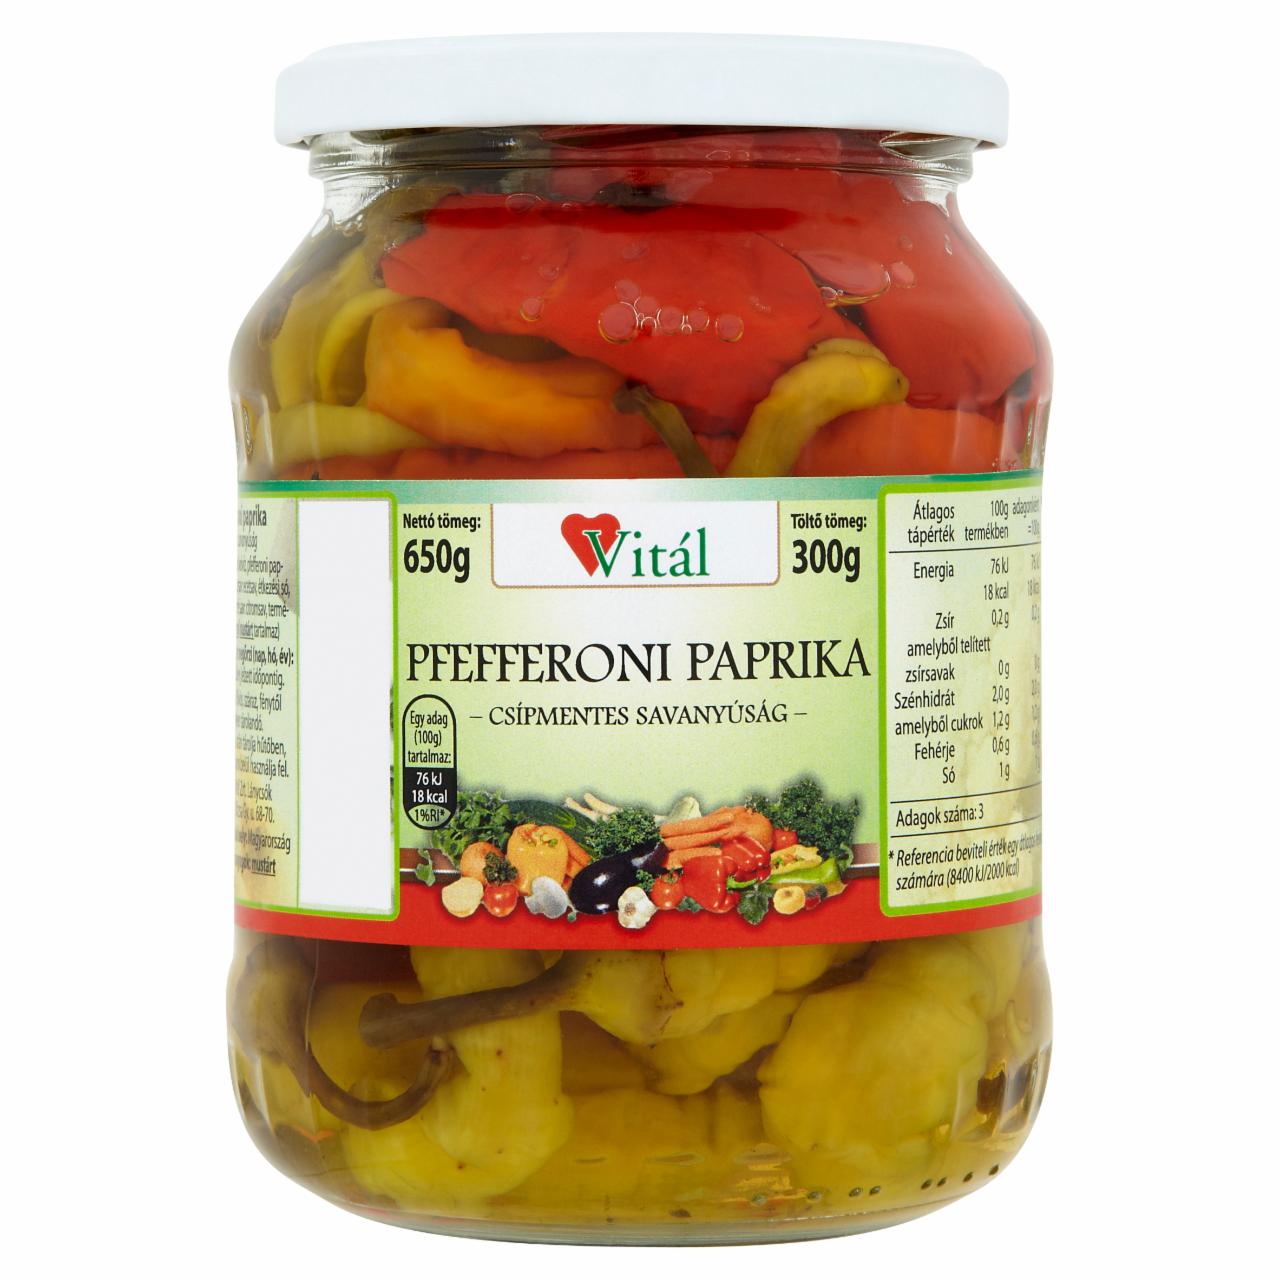 Képek - Vitál pfefferoni paprika 650 g